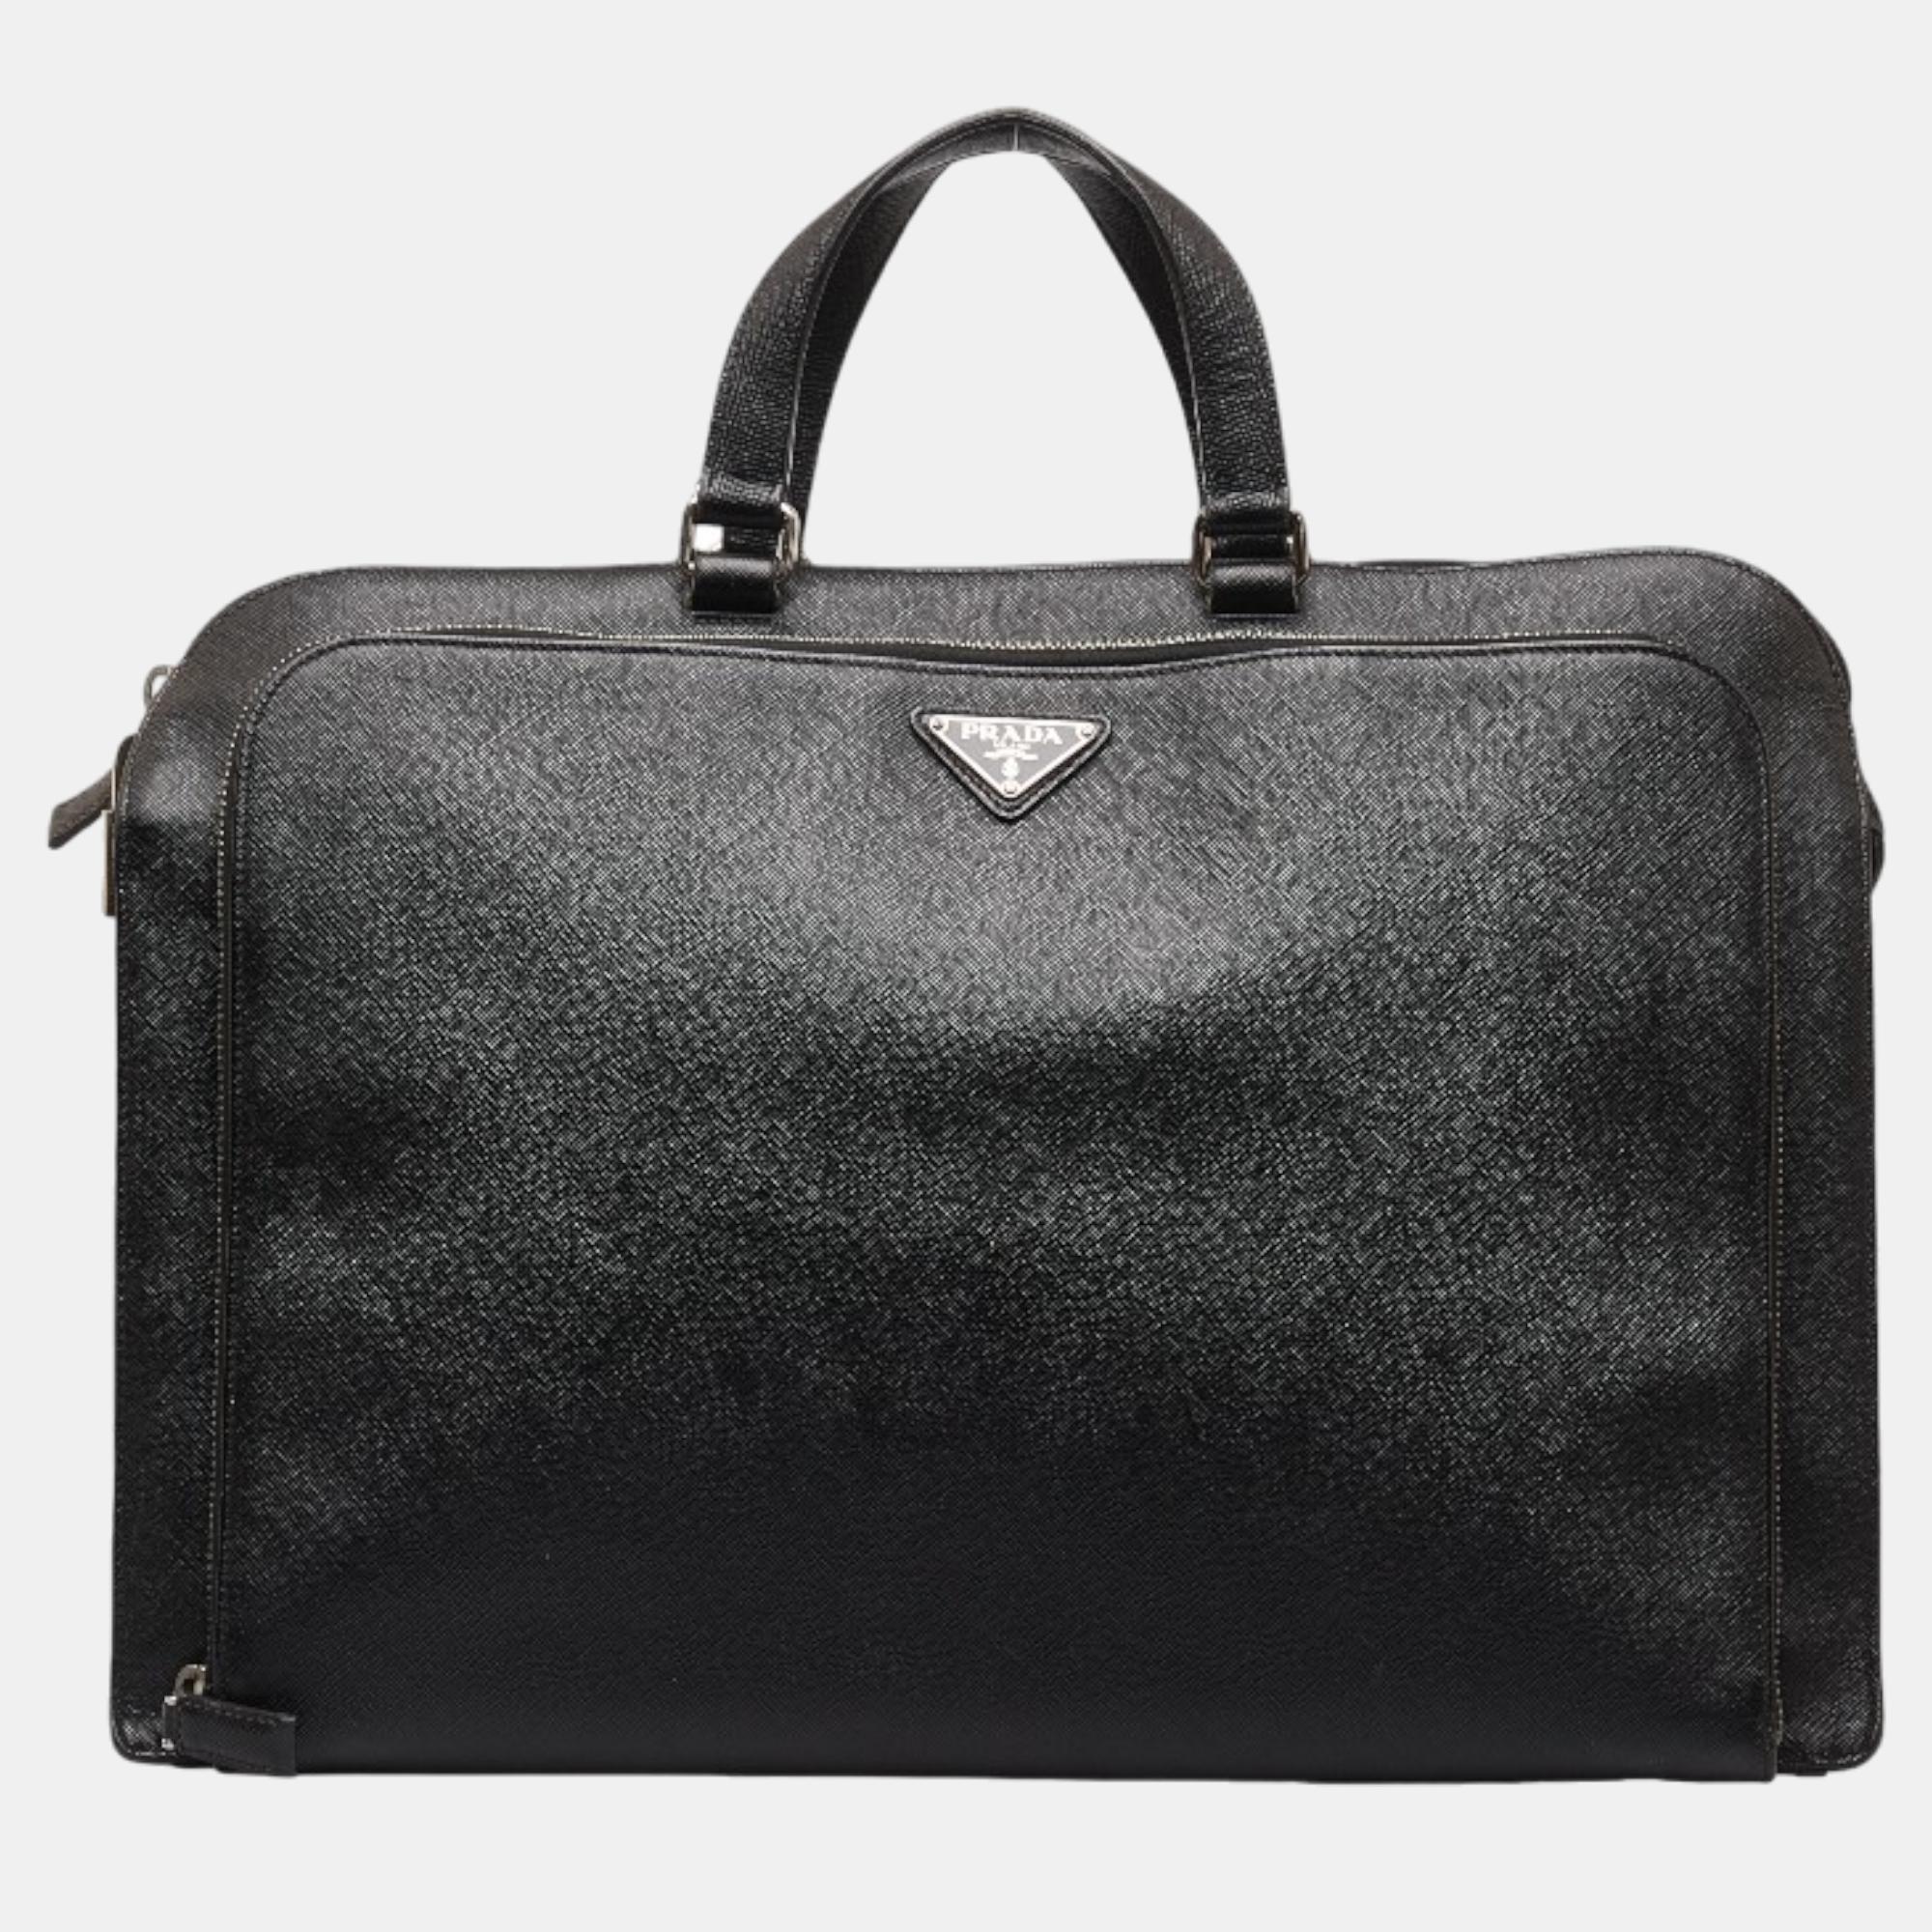 Prada black leather saffiano lux business briefcase